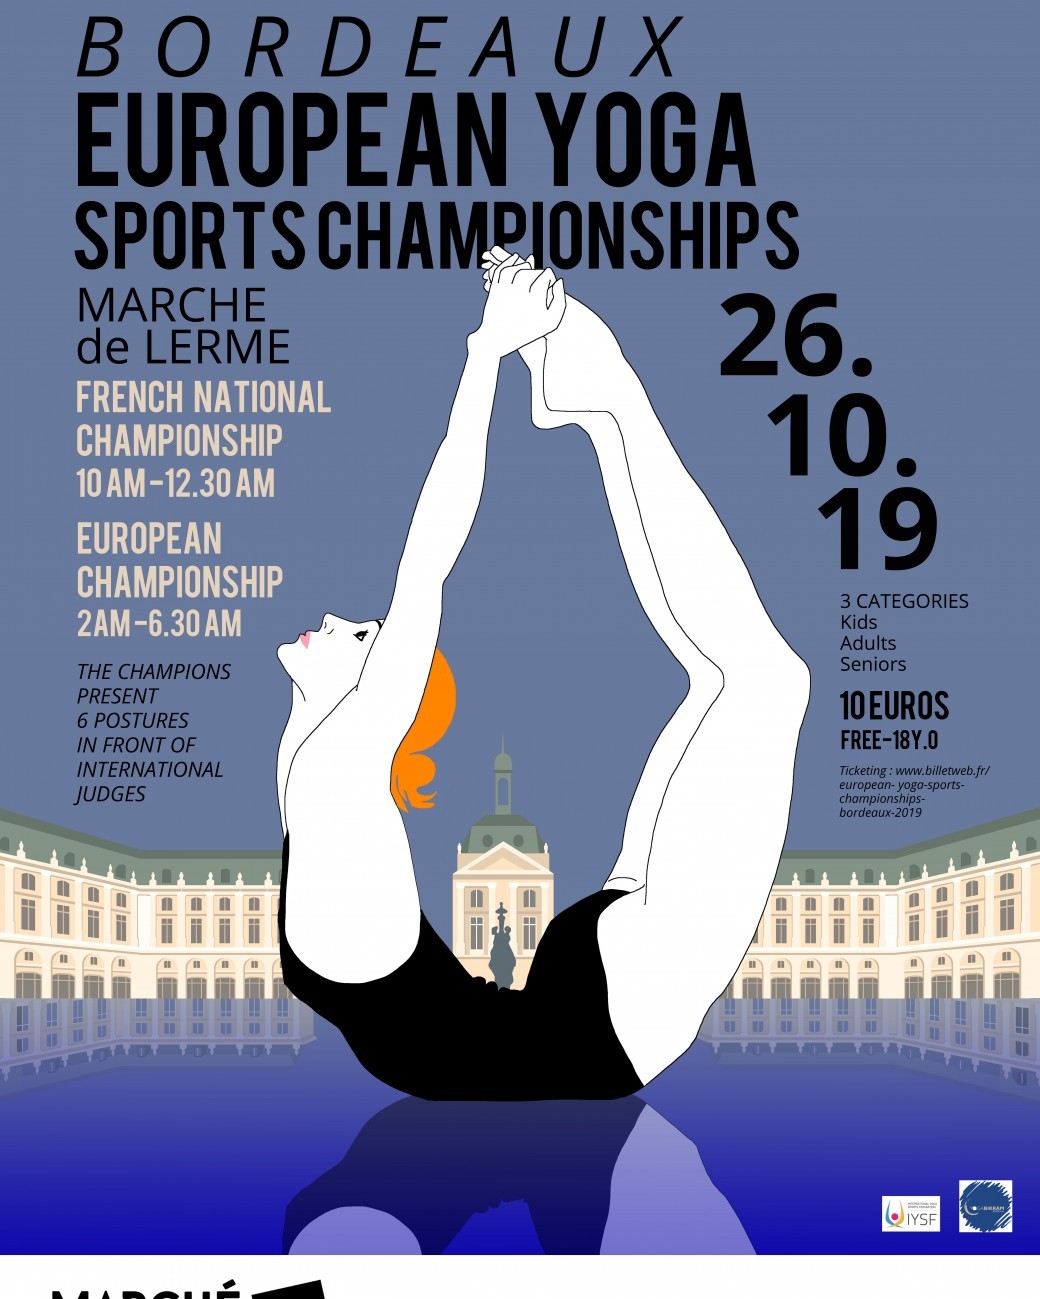 European Yoga Sports Championships Bordeaux 2019